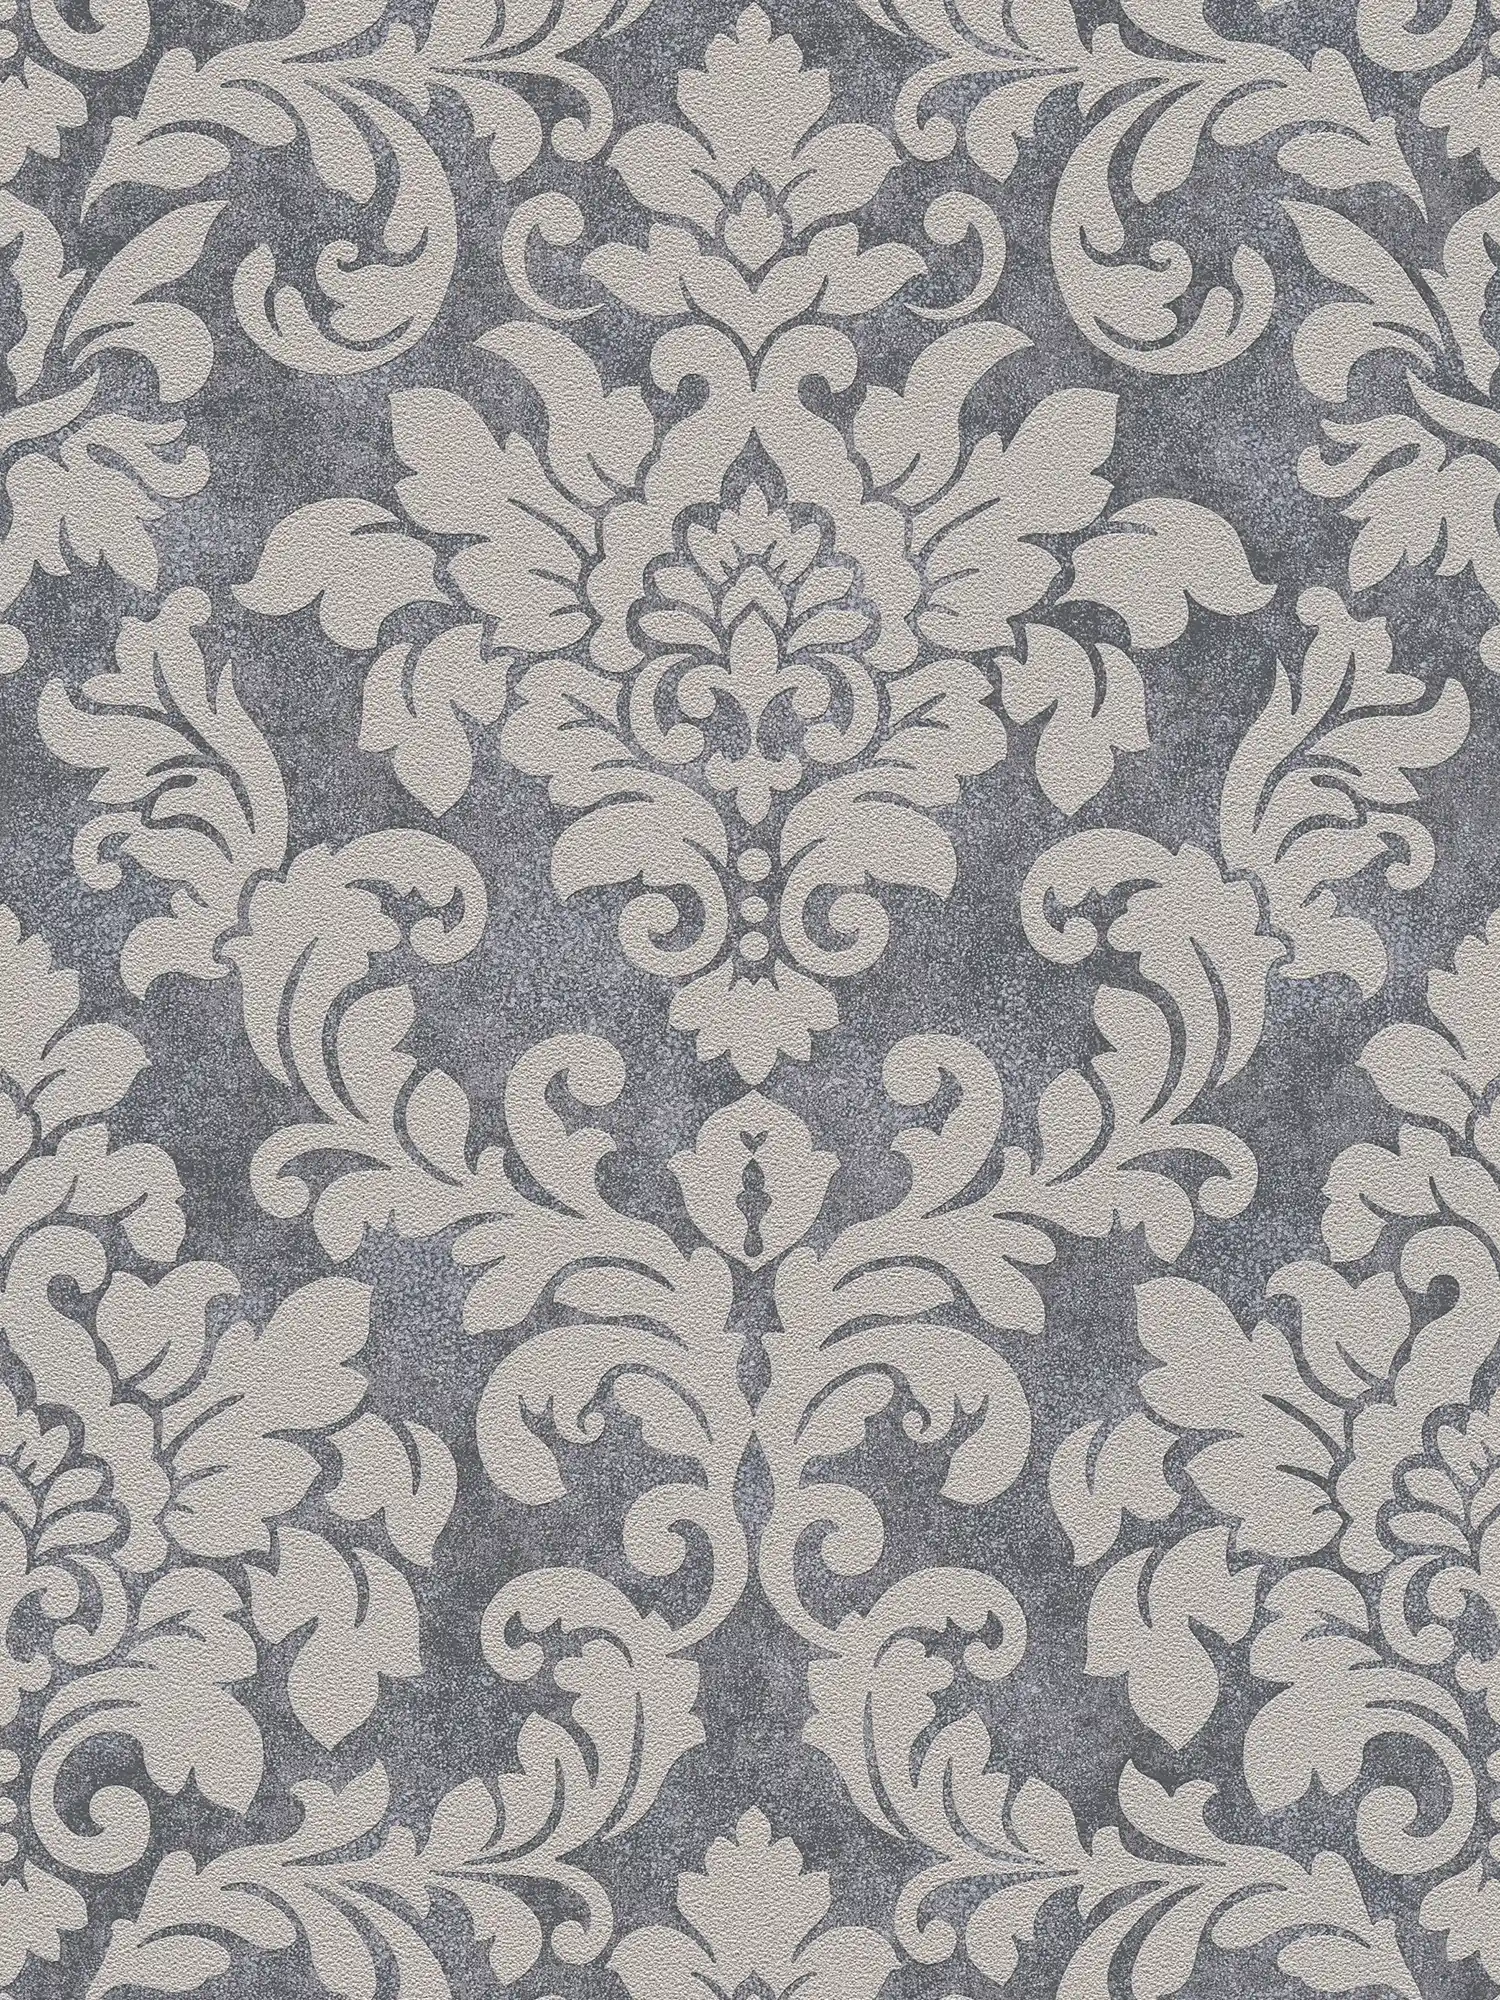 Floral ornamental wallpaper with metallic effect - grey, beige, silver
